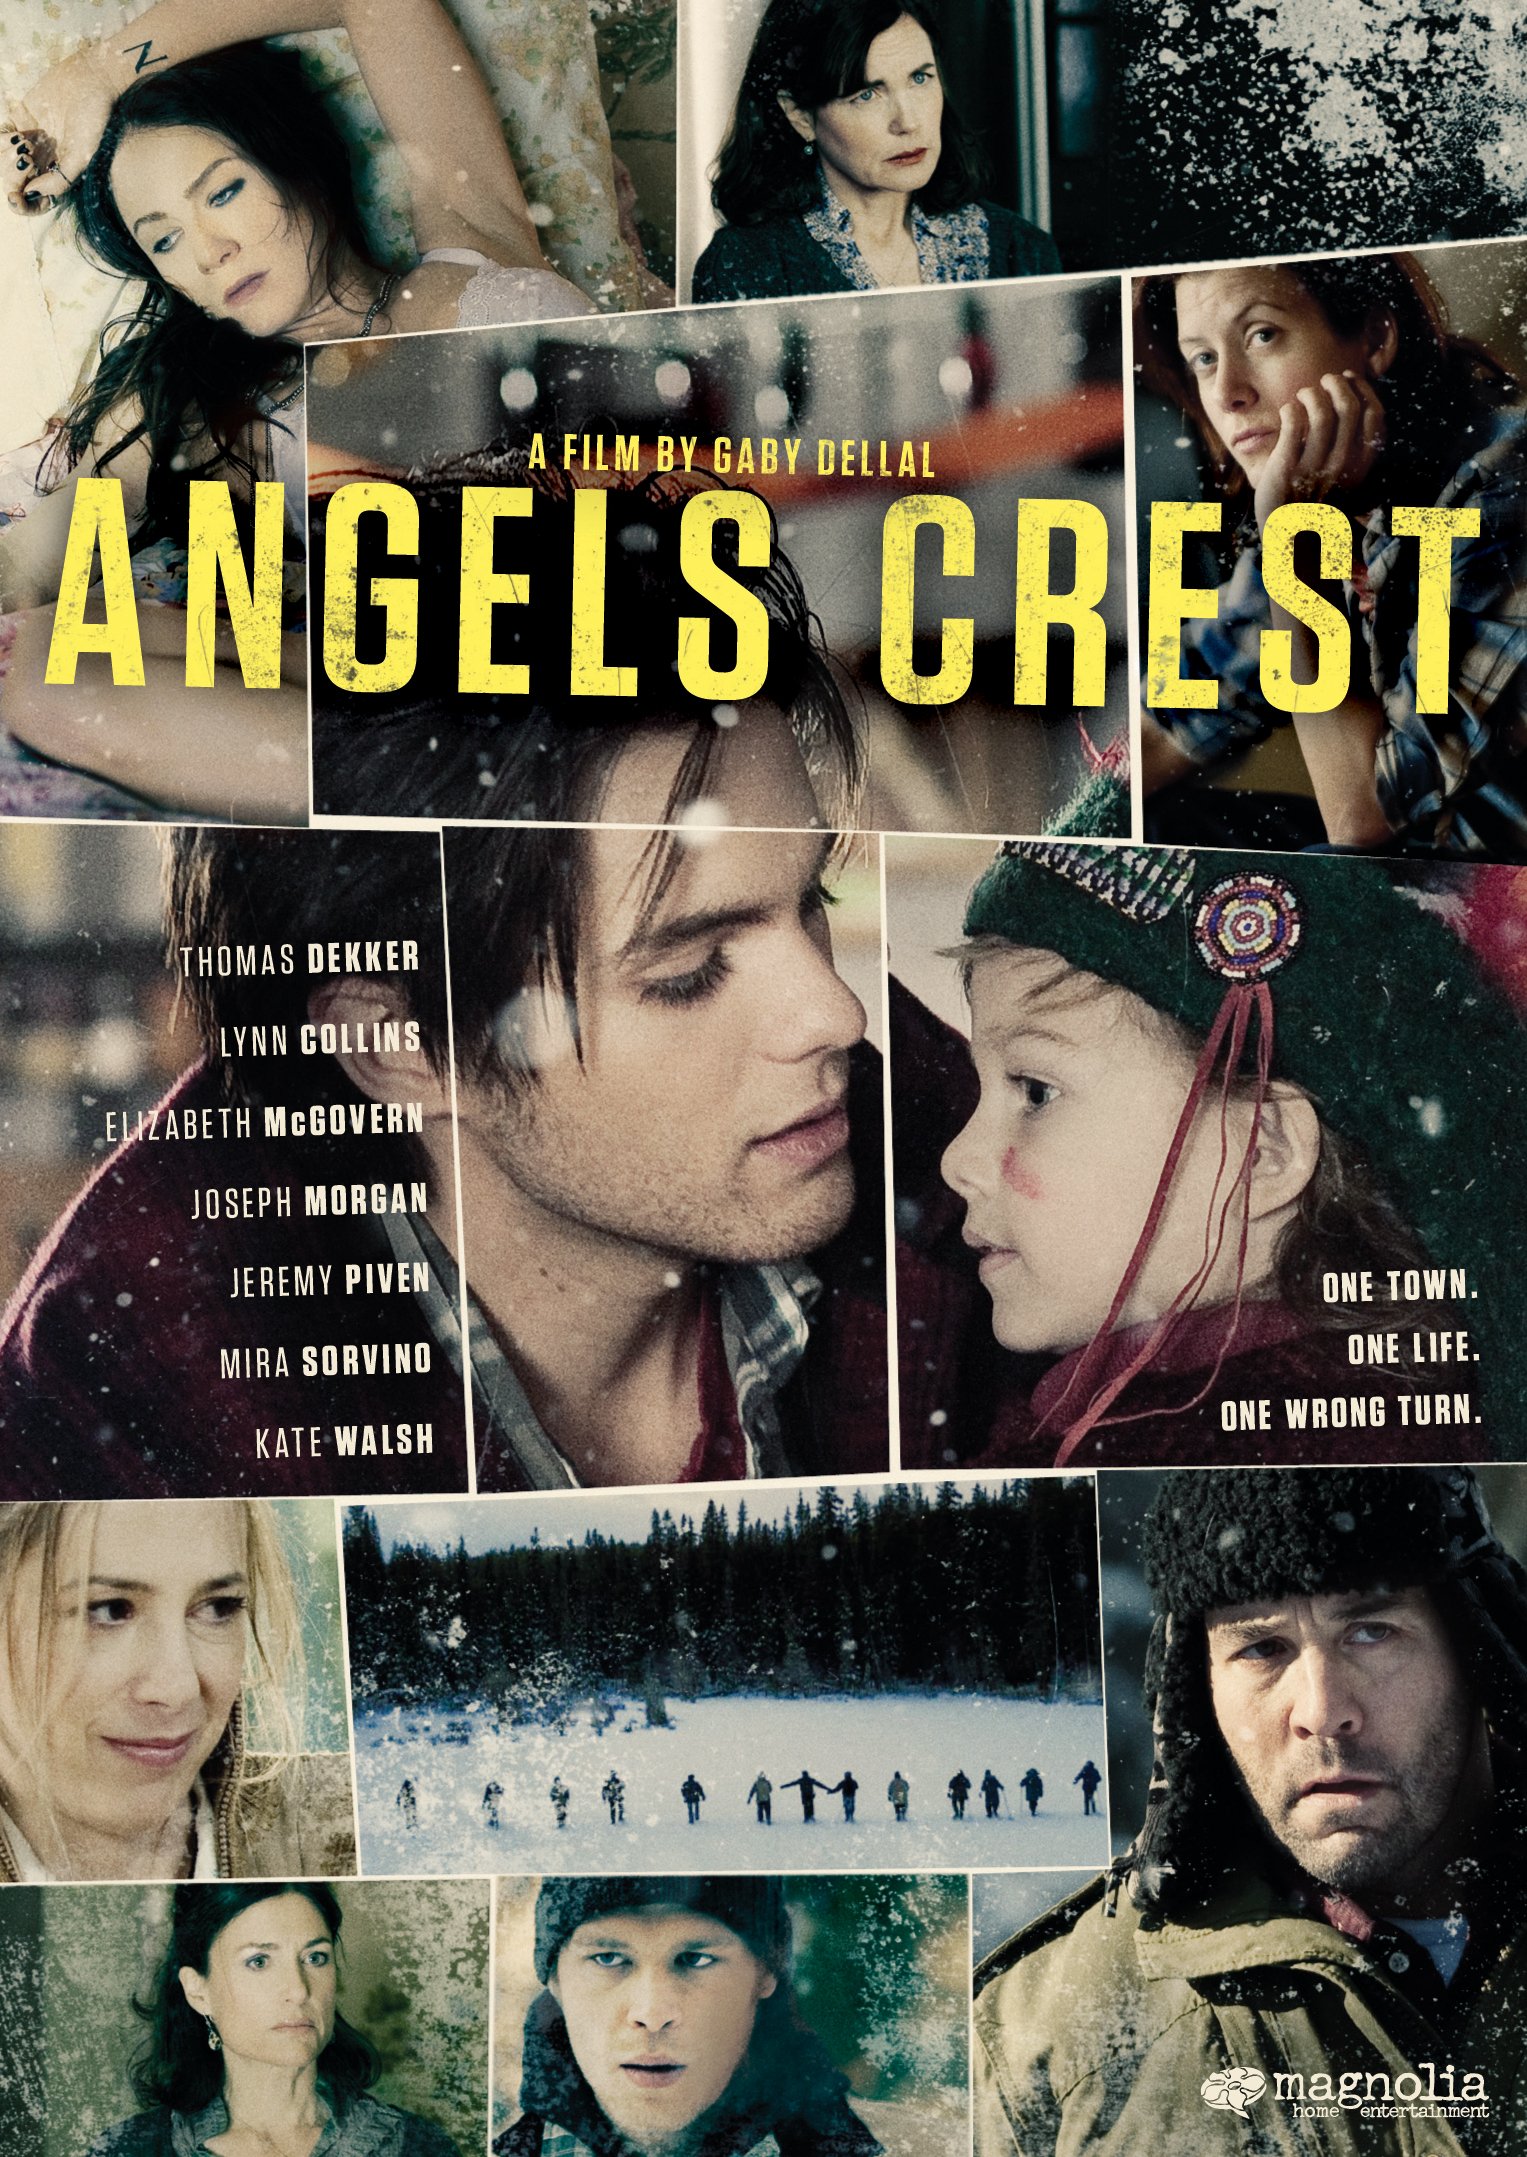 Angels Crest DVD Release Date April 3, 2012